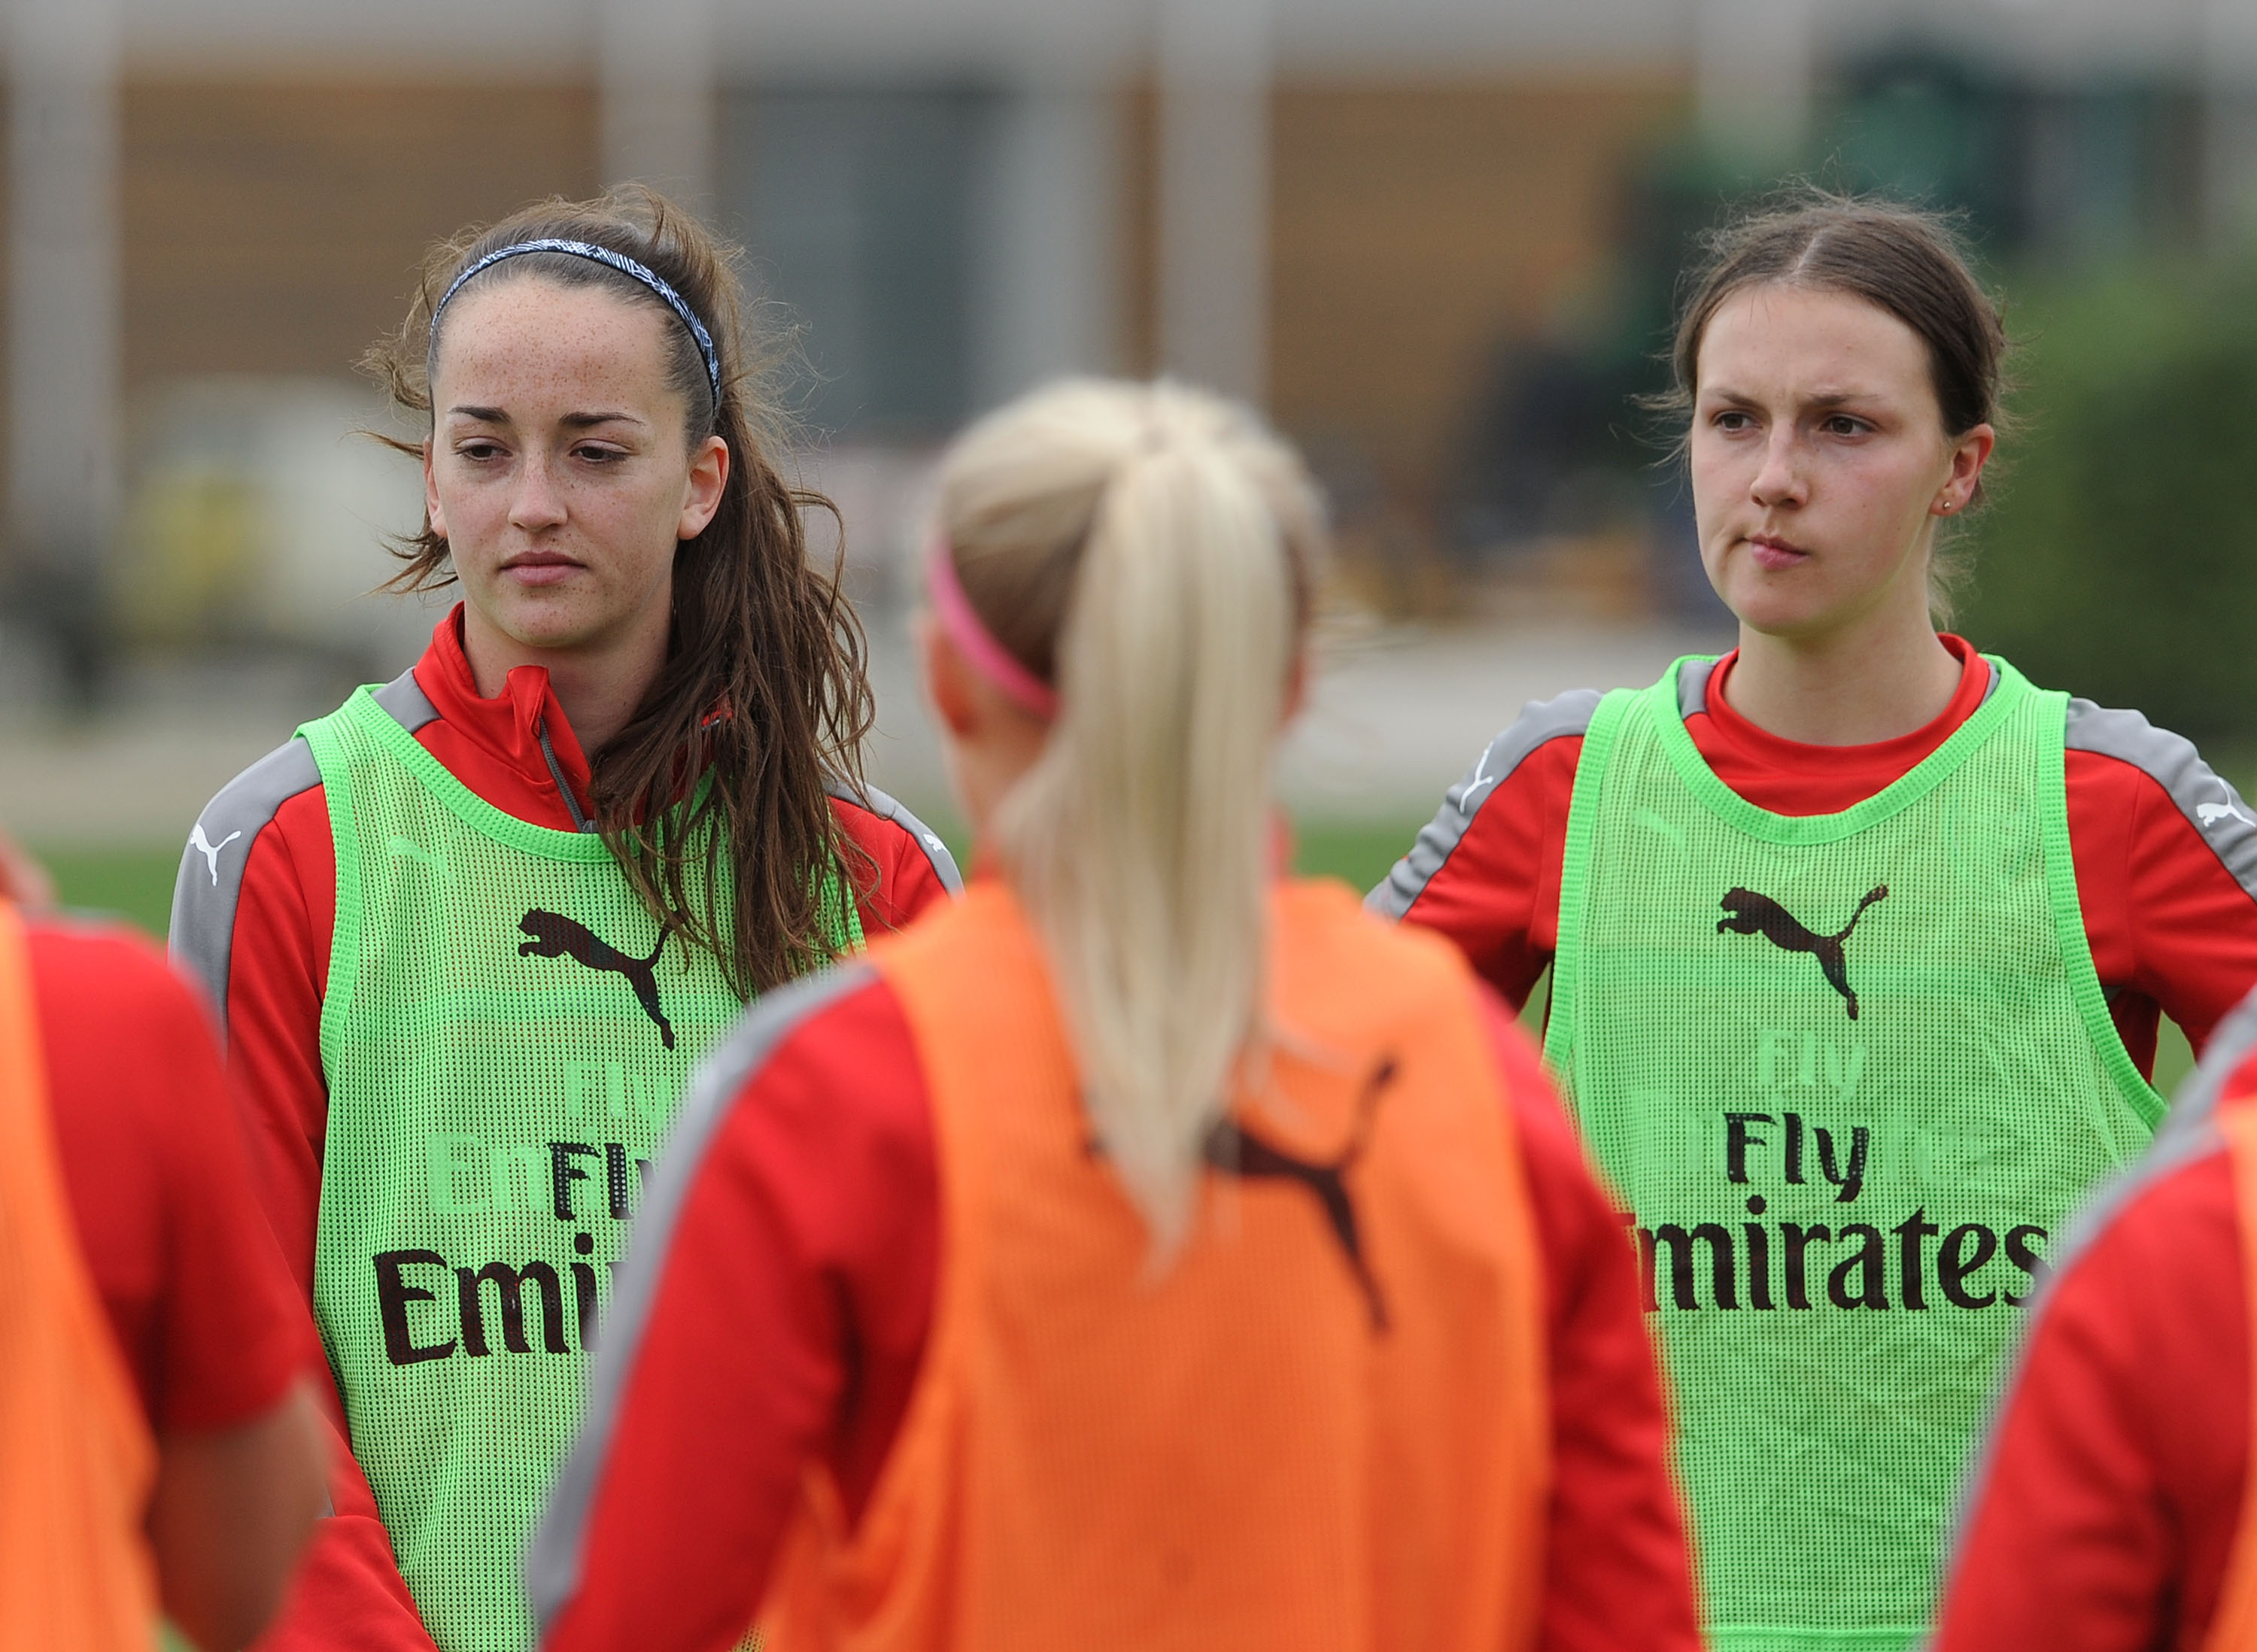 Arsenal Ladies Training Session